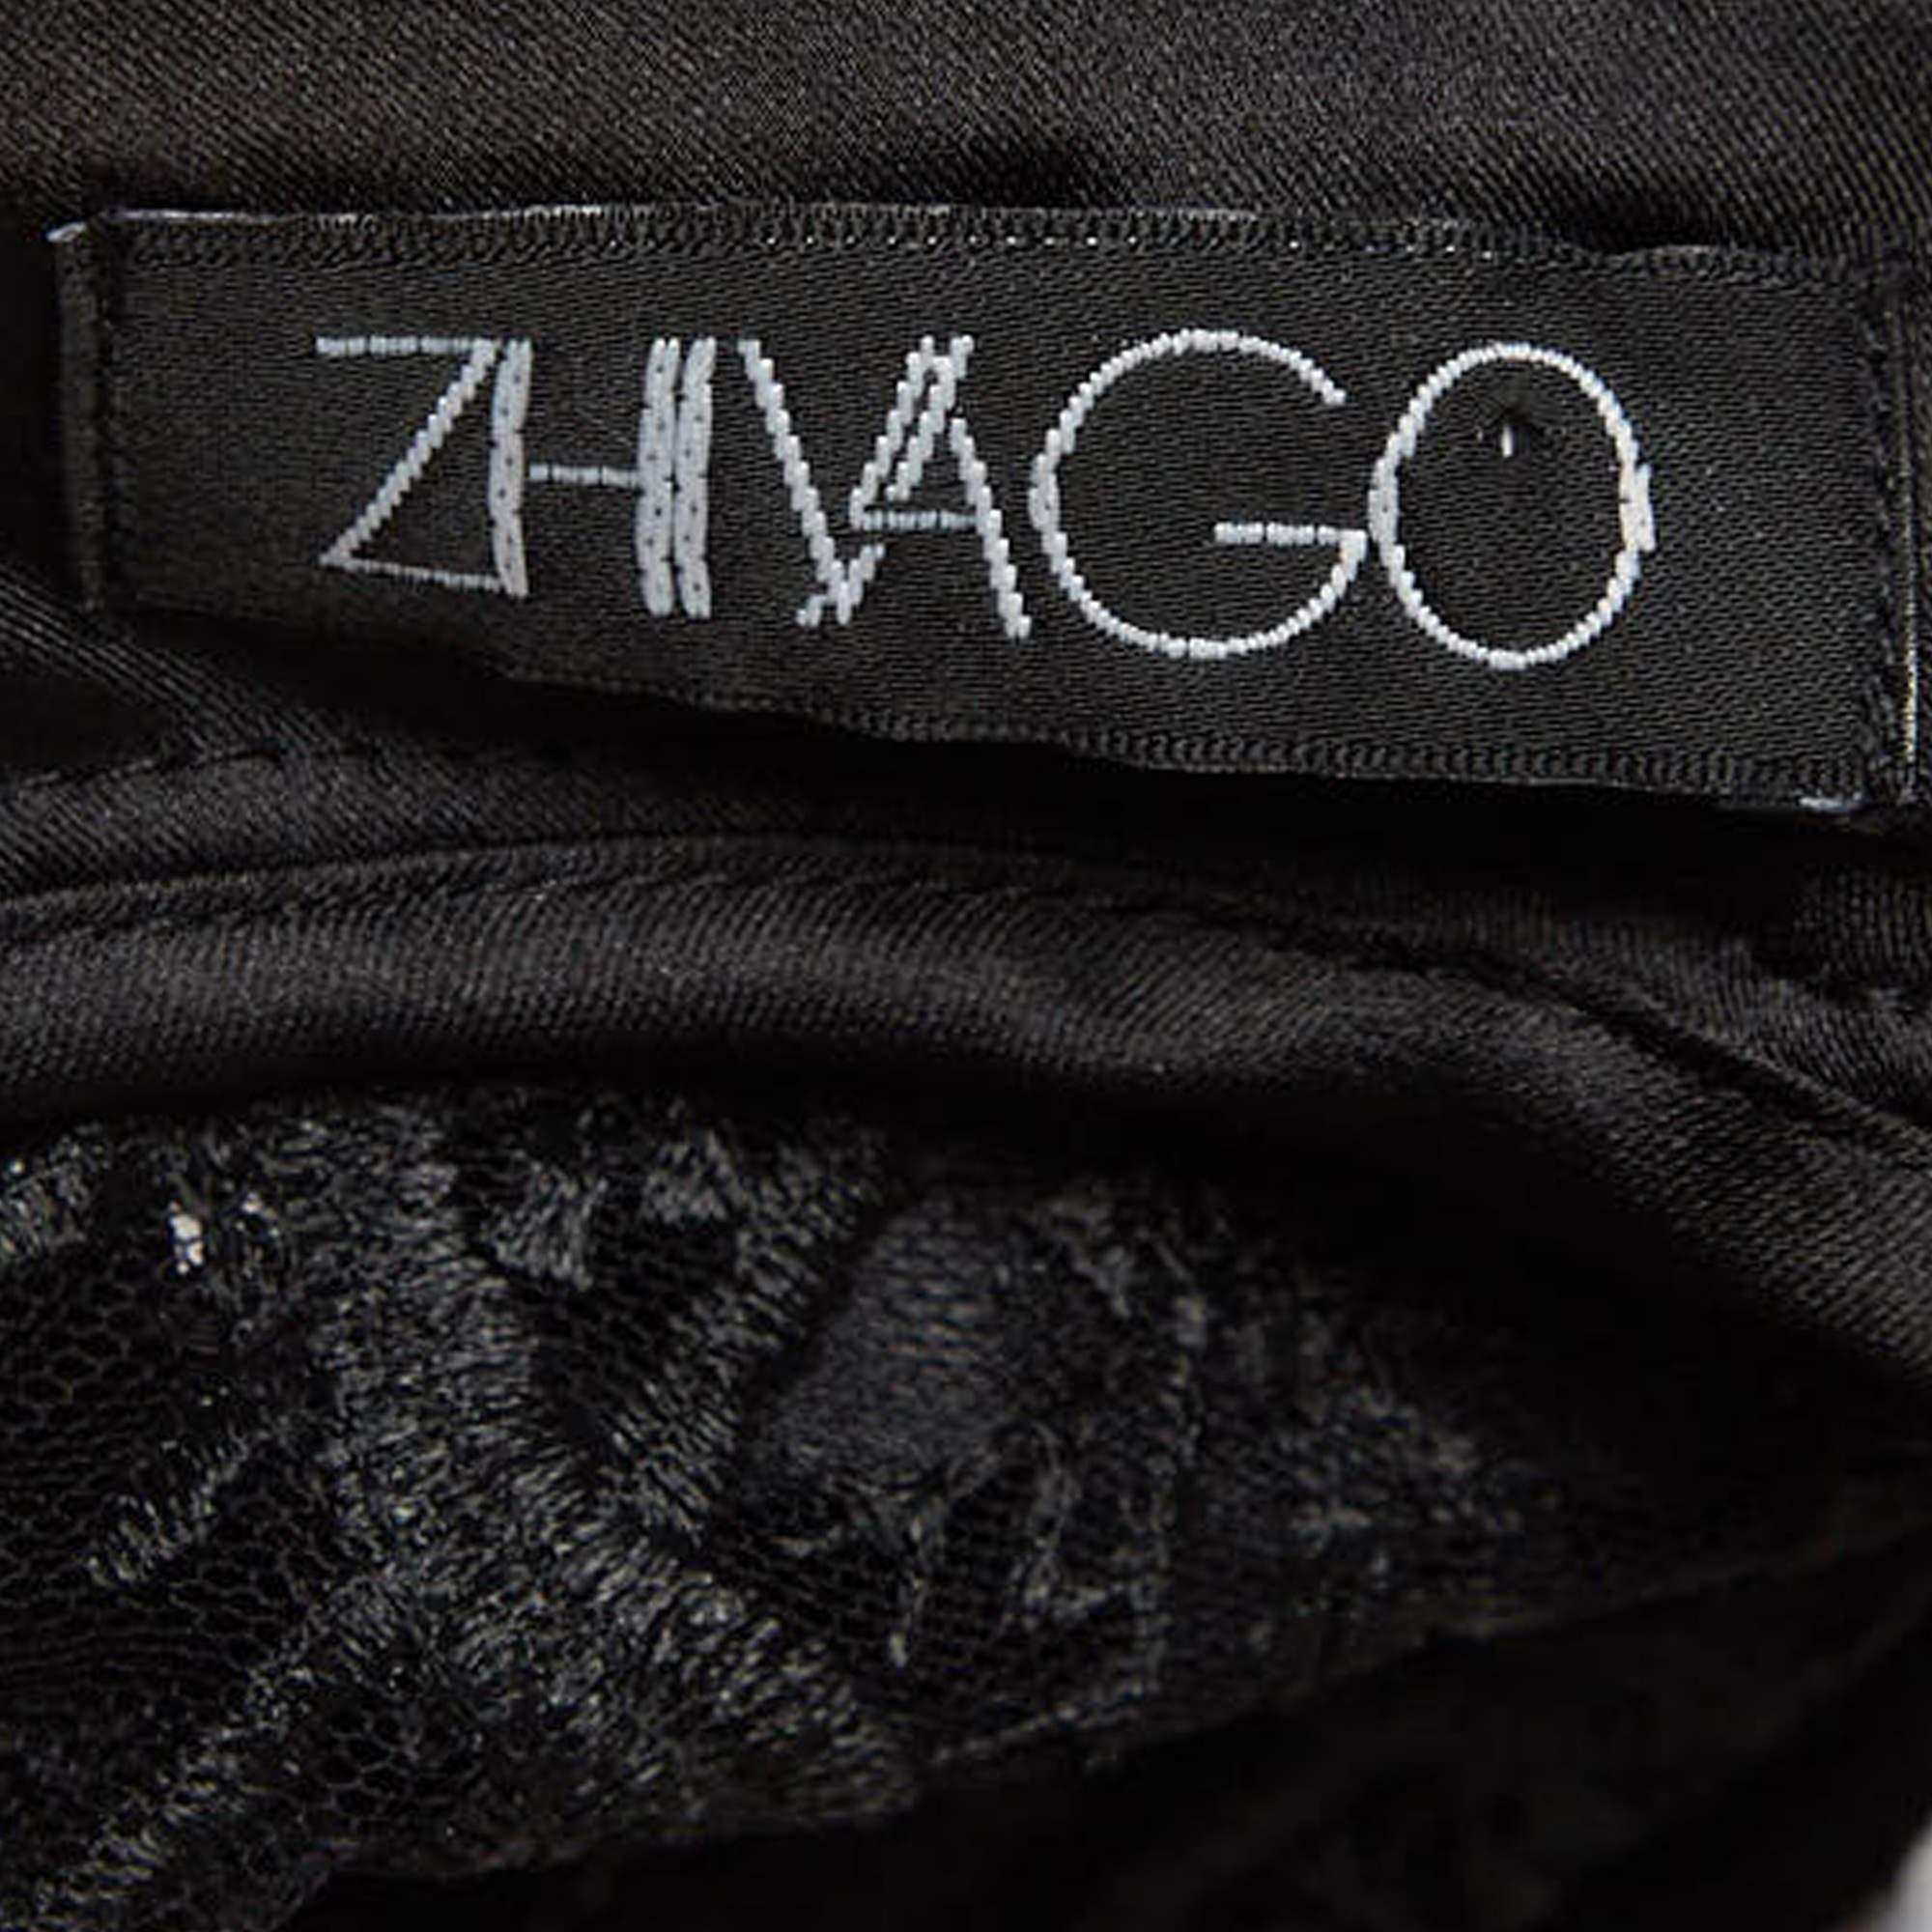 Zhivago Black Embroidered Mesh High Neck Sheer Top M In Excellent Condition For Sale In Dubai, Al Qouz 2